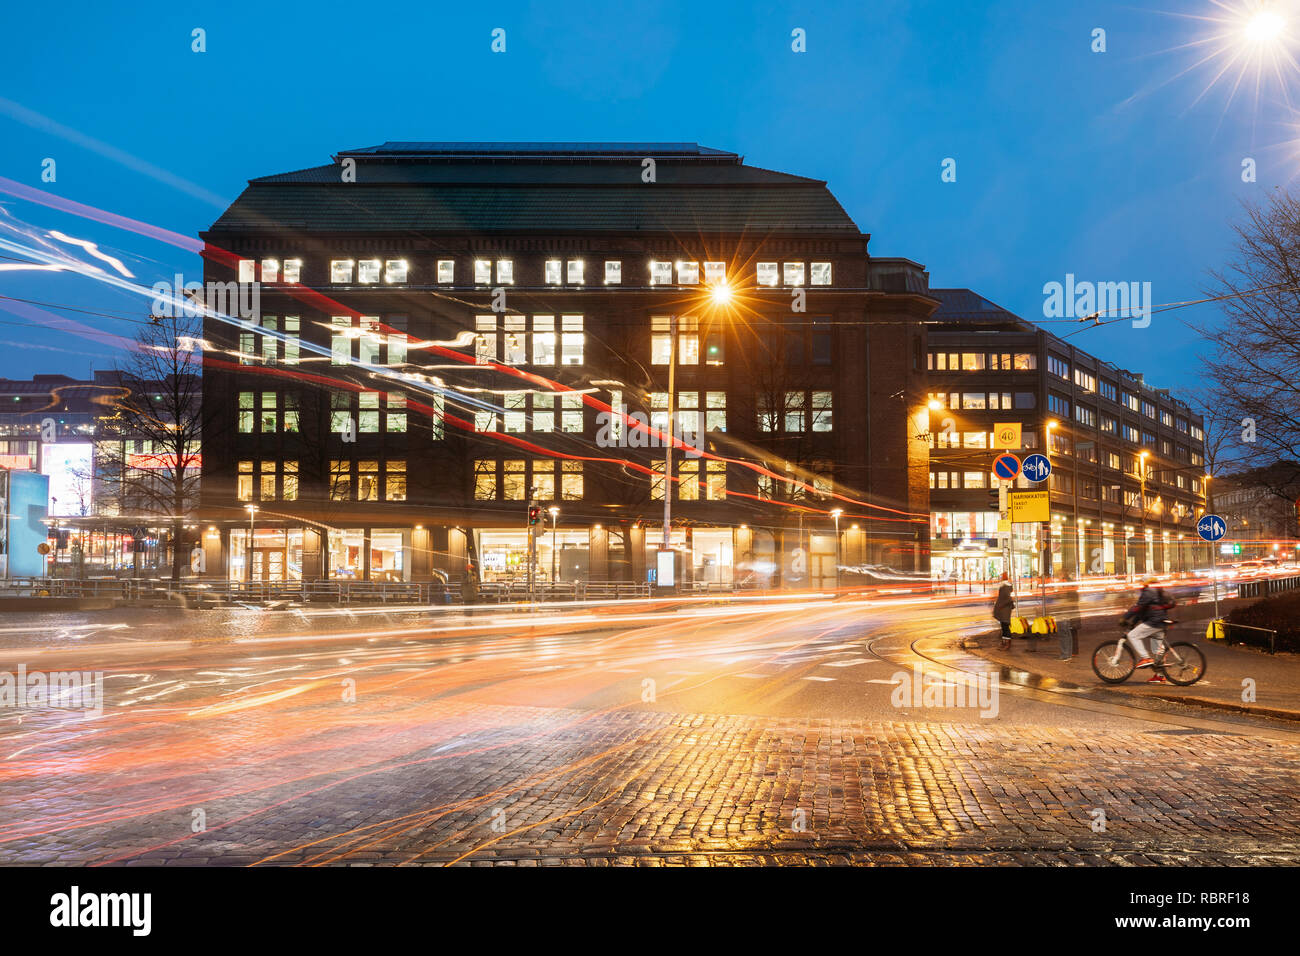 Helsinki, Finland. Building On The Corner Of Arkadiankatu Street And Mannerheimintie Or Mannerheim Avenue In Evening Night Illumination. Stock Photo